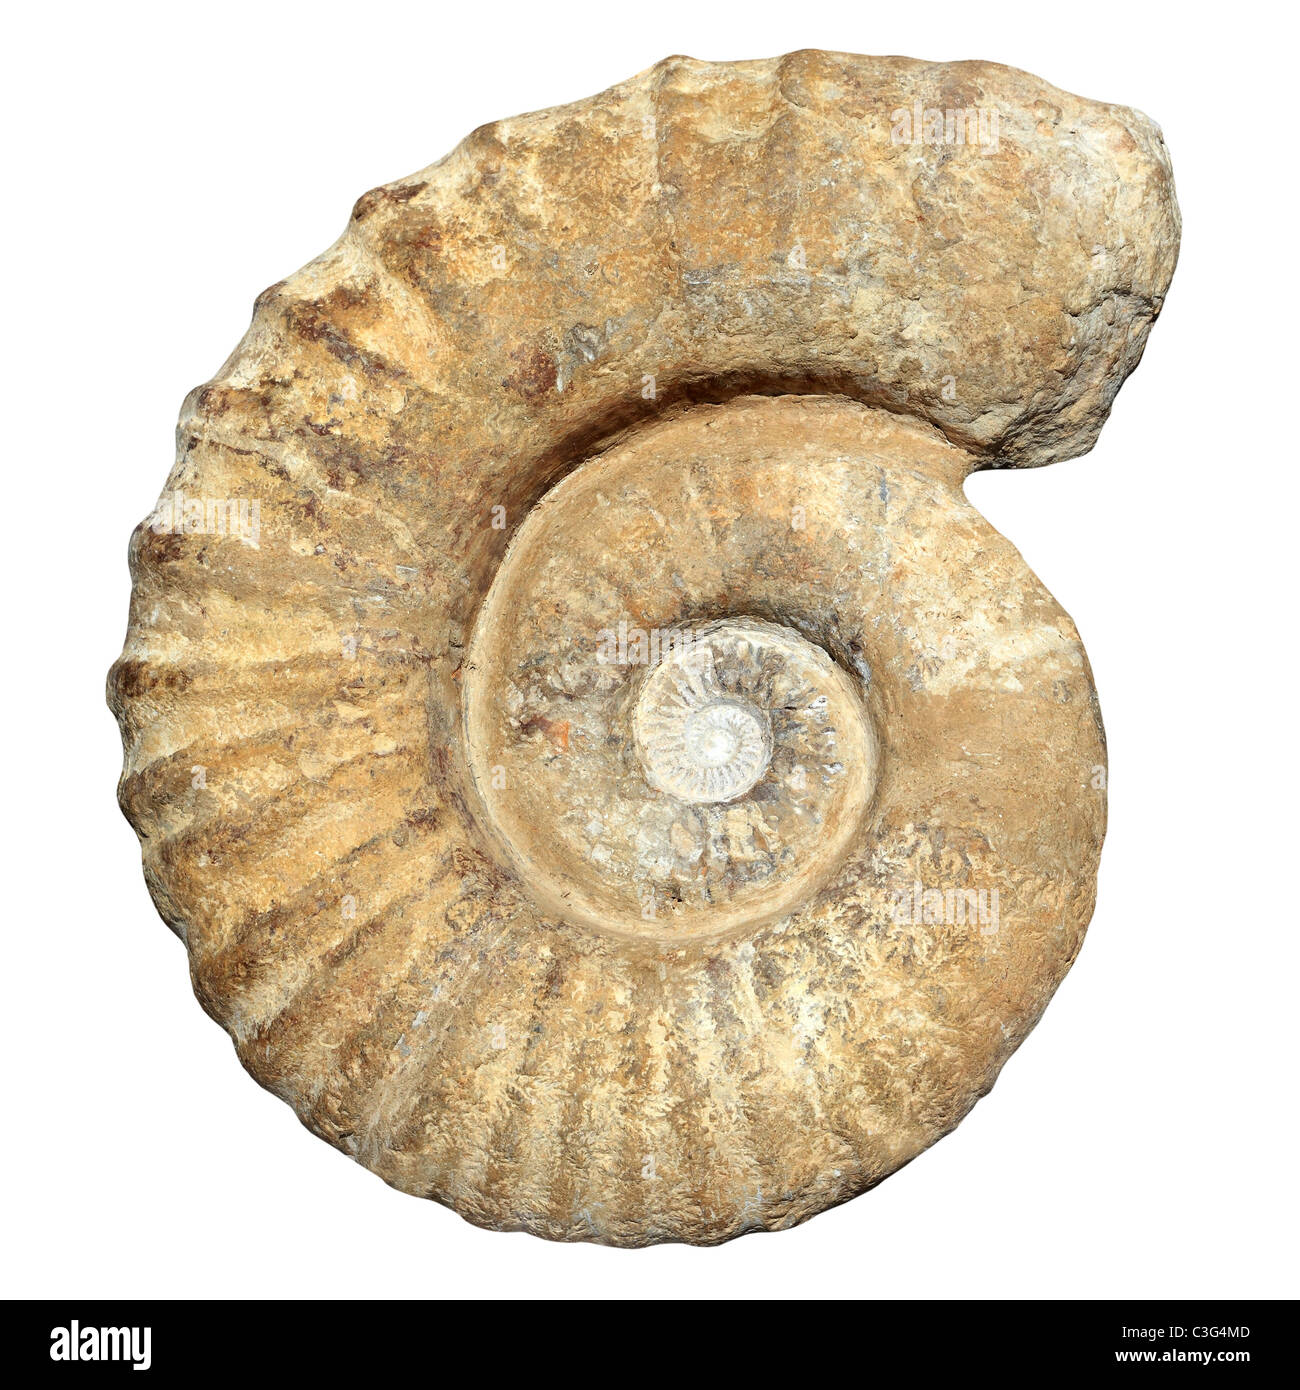 Arriba 91+ imagen snail shell fossil